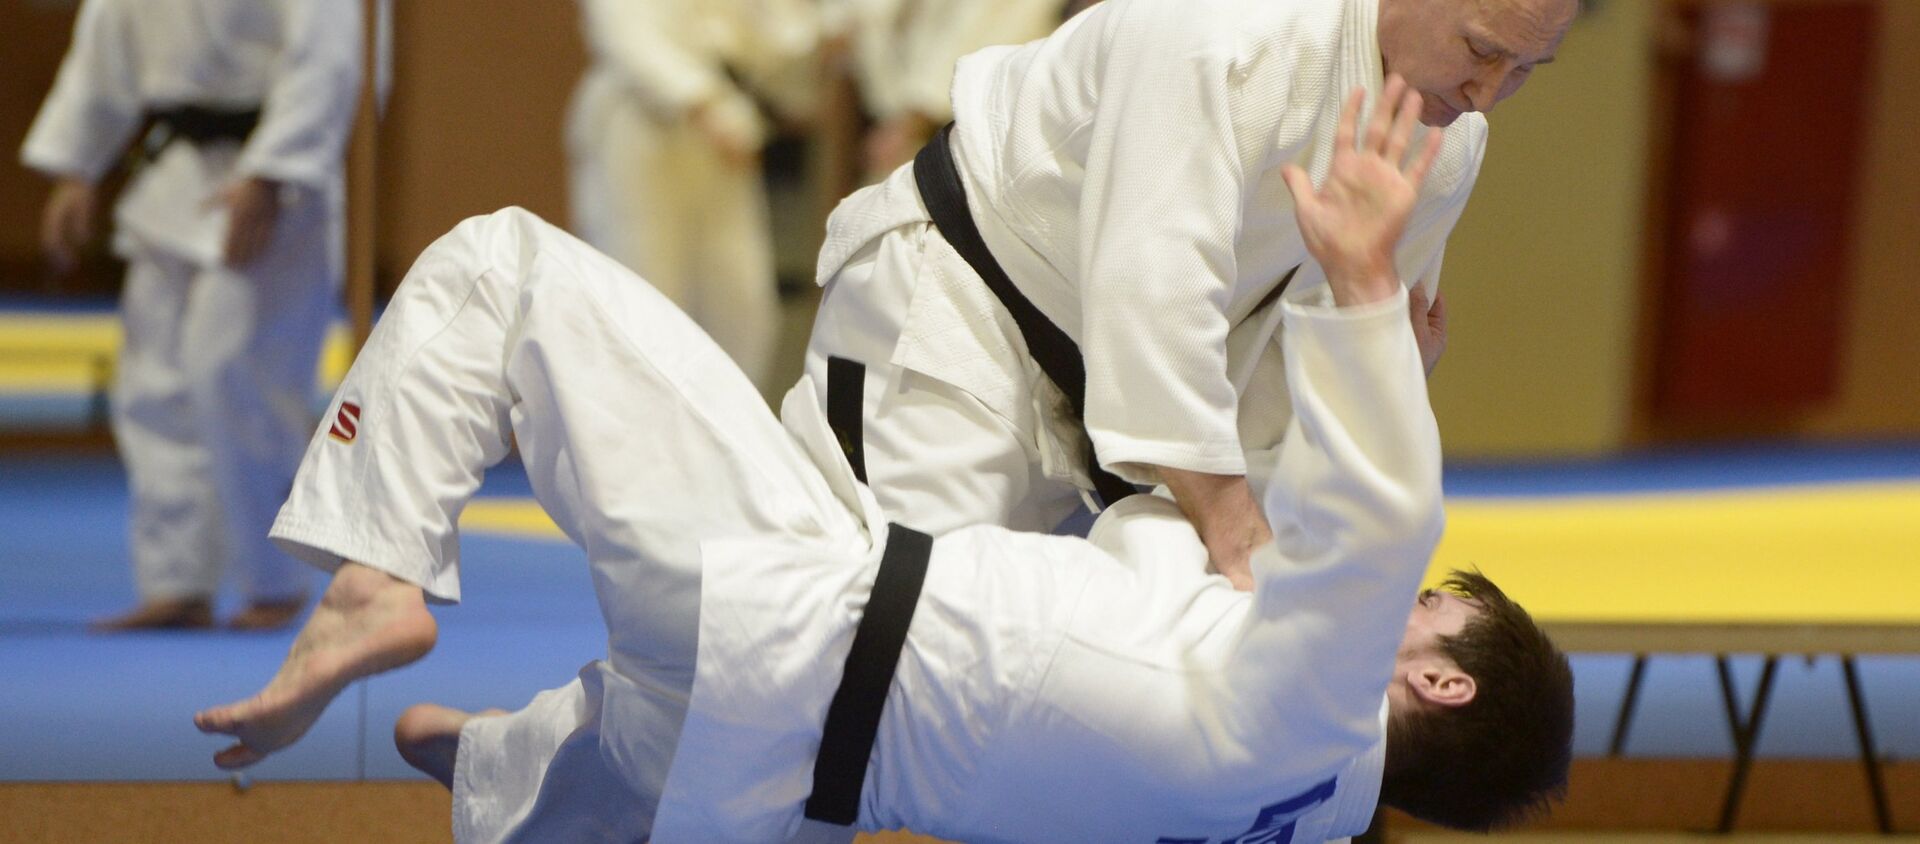 Vladímir Putin, presidente de Rusia, practicando judo - Sputnik Mundo, 1920, 28.10.2020